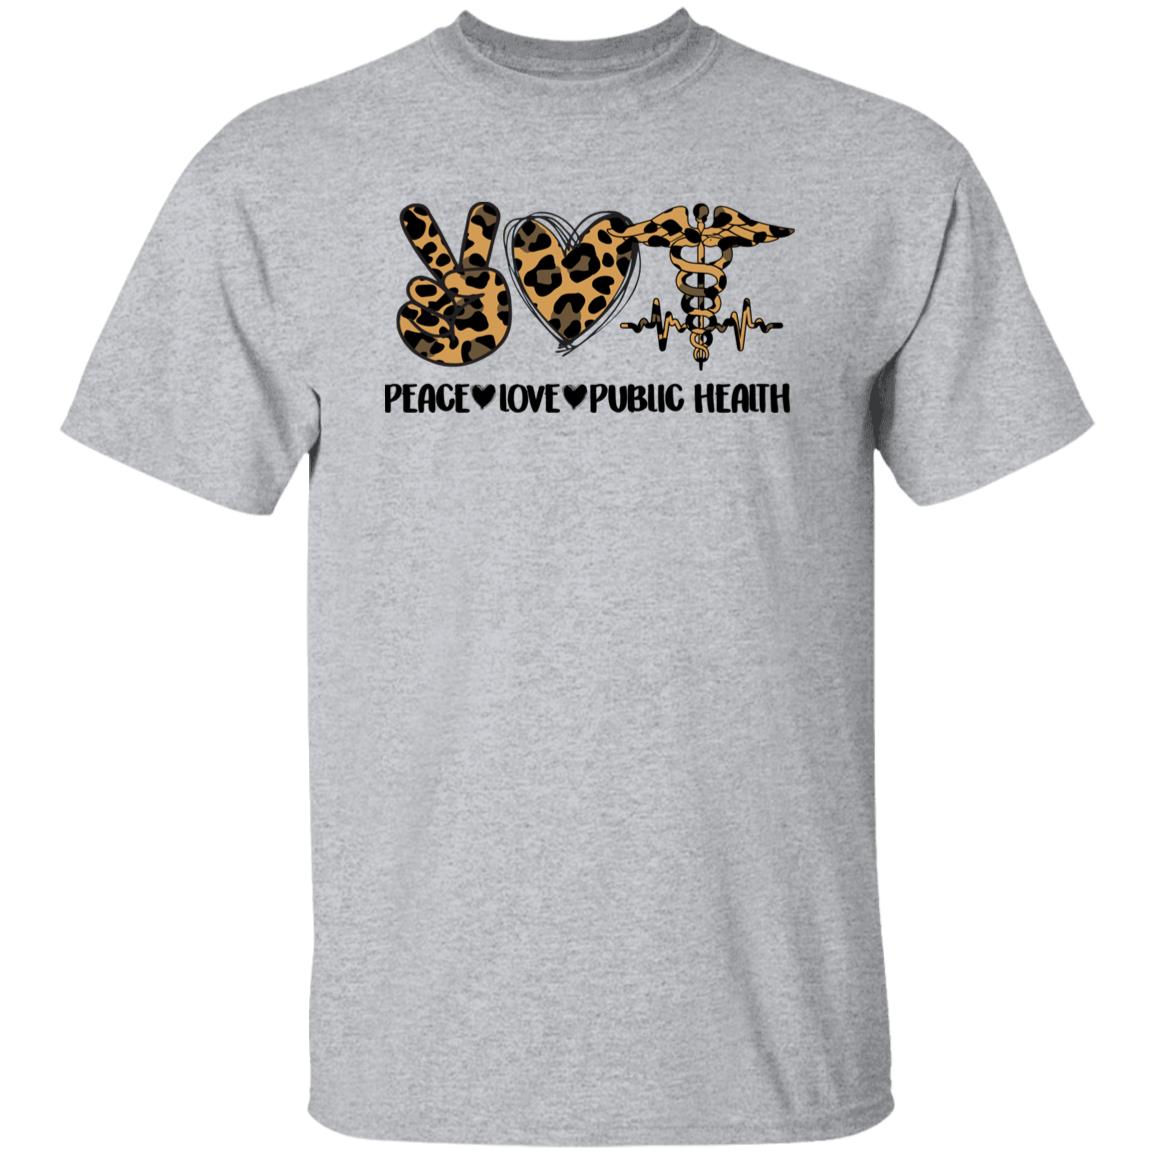 Peace love public health T-Shirt Leopard skin Public Health Nurse Unisex Tee Sand White Sport Grey-Family-Gift-Planet